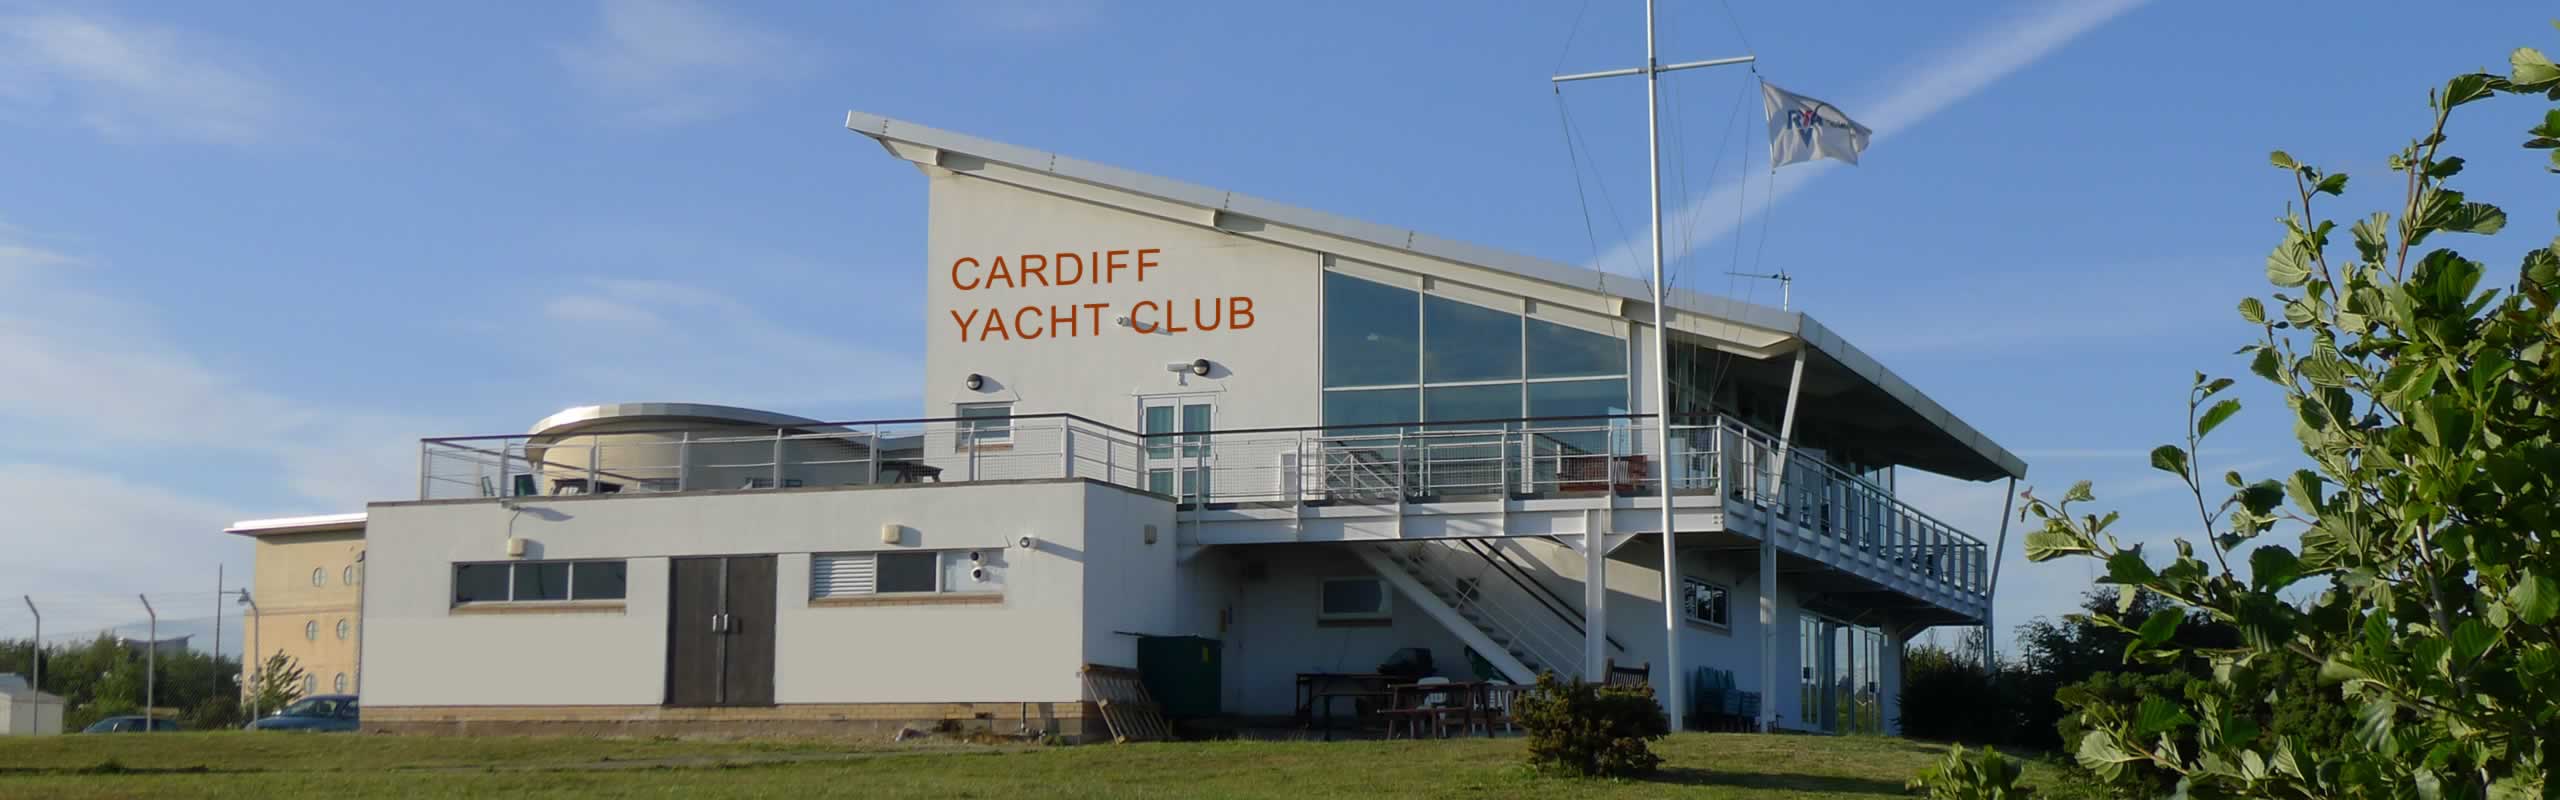 cardiff bay yacht club jobs